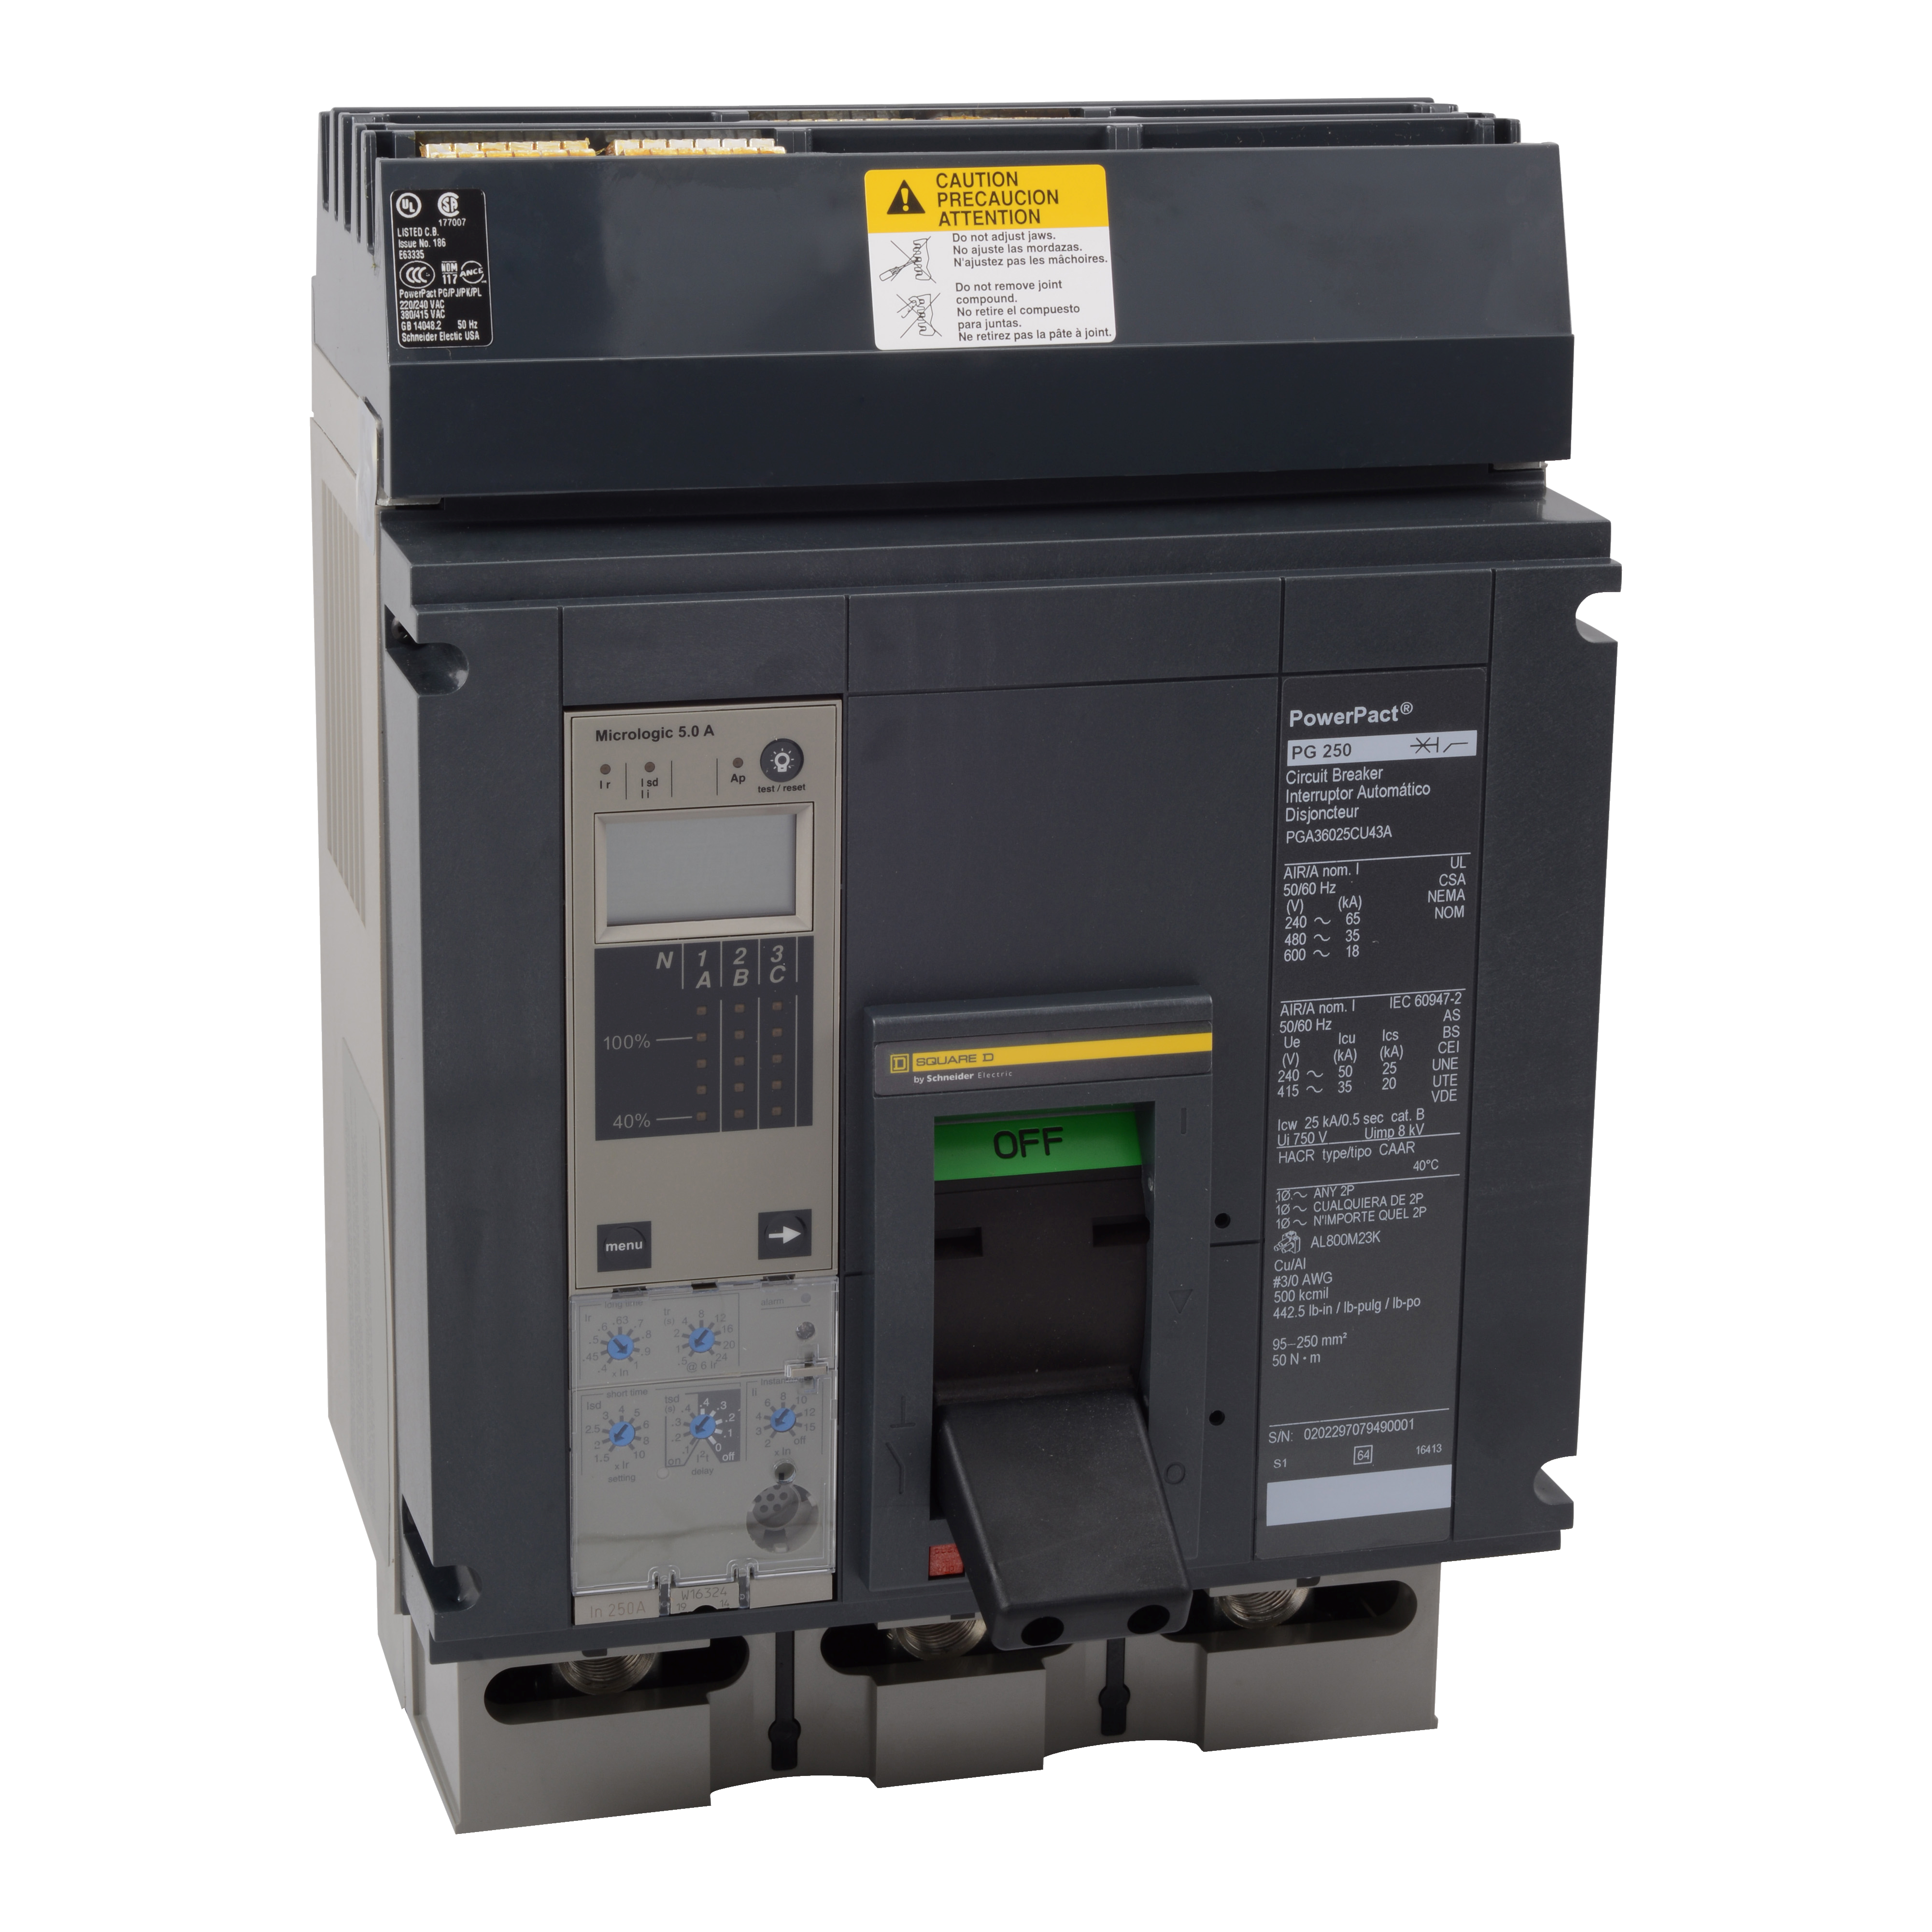 Circuit breaker, PowerPacT P, 800A, 3 pole, 600VAC, 25kA, I-Line, ET1.0l, 80%, ABC